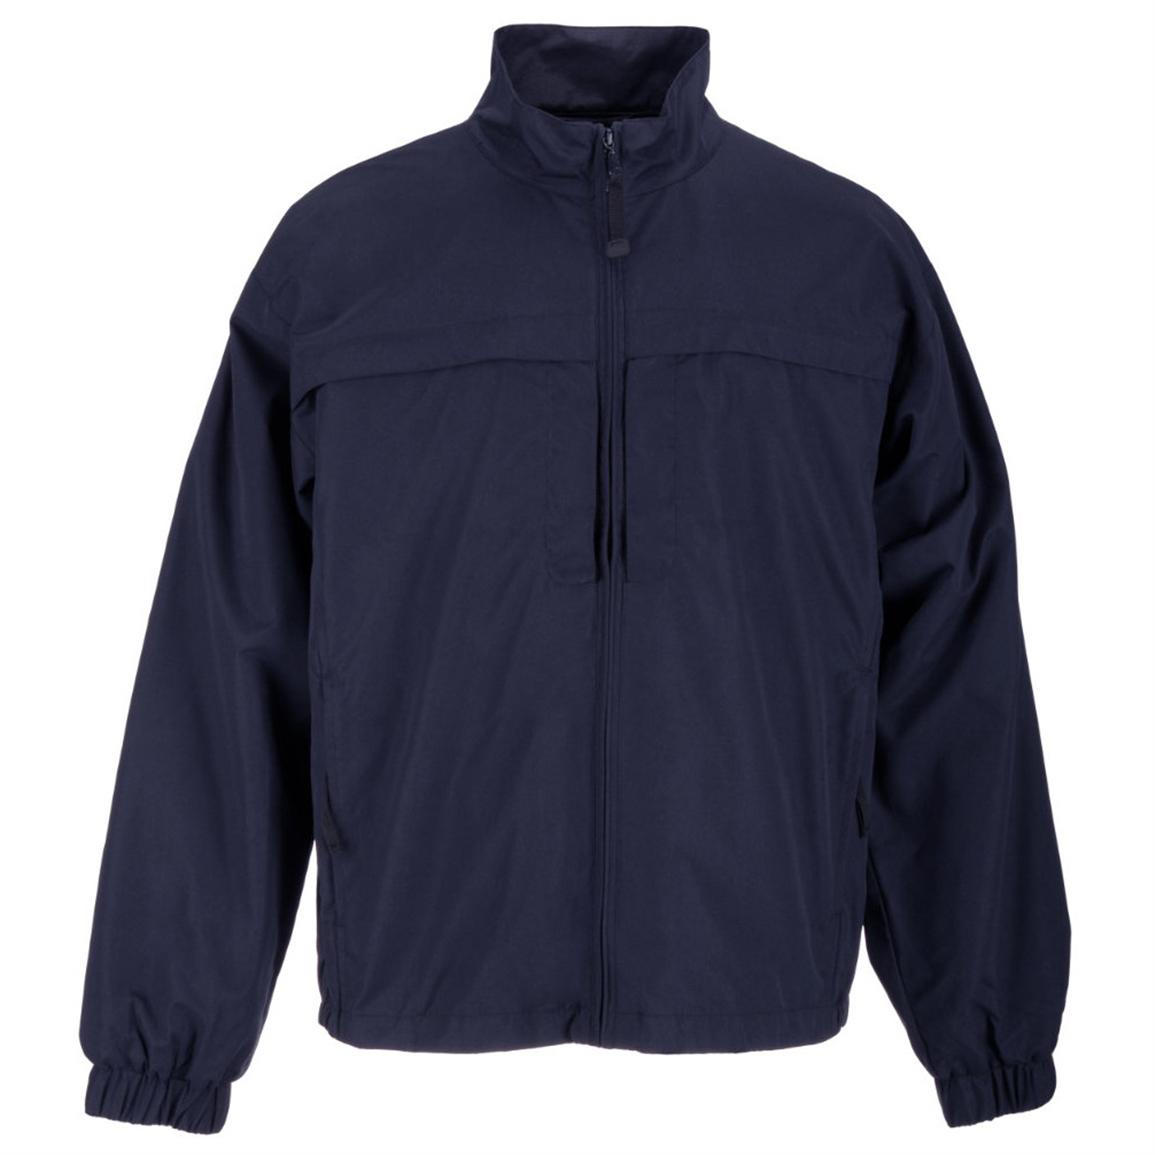 5.11 Tactical® Response Jacket - 230257, Tactical Clothing at Sportsman ...